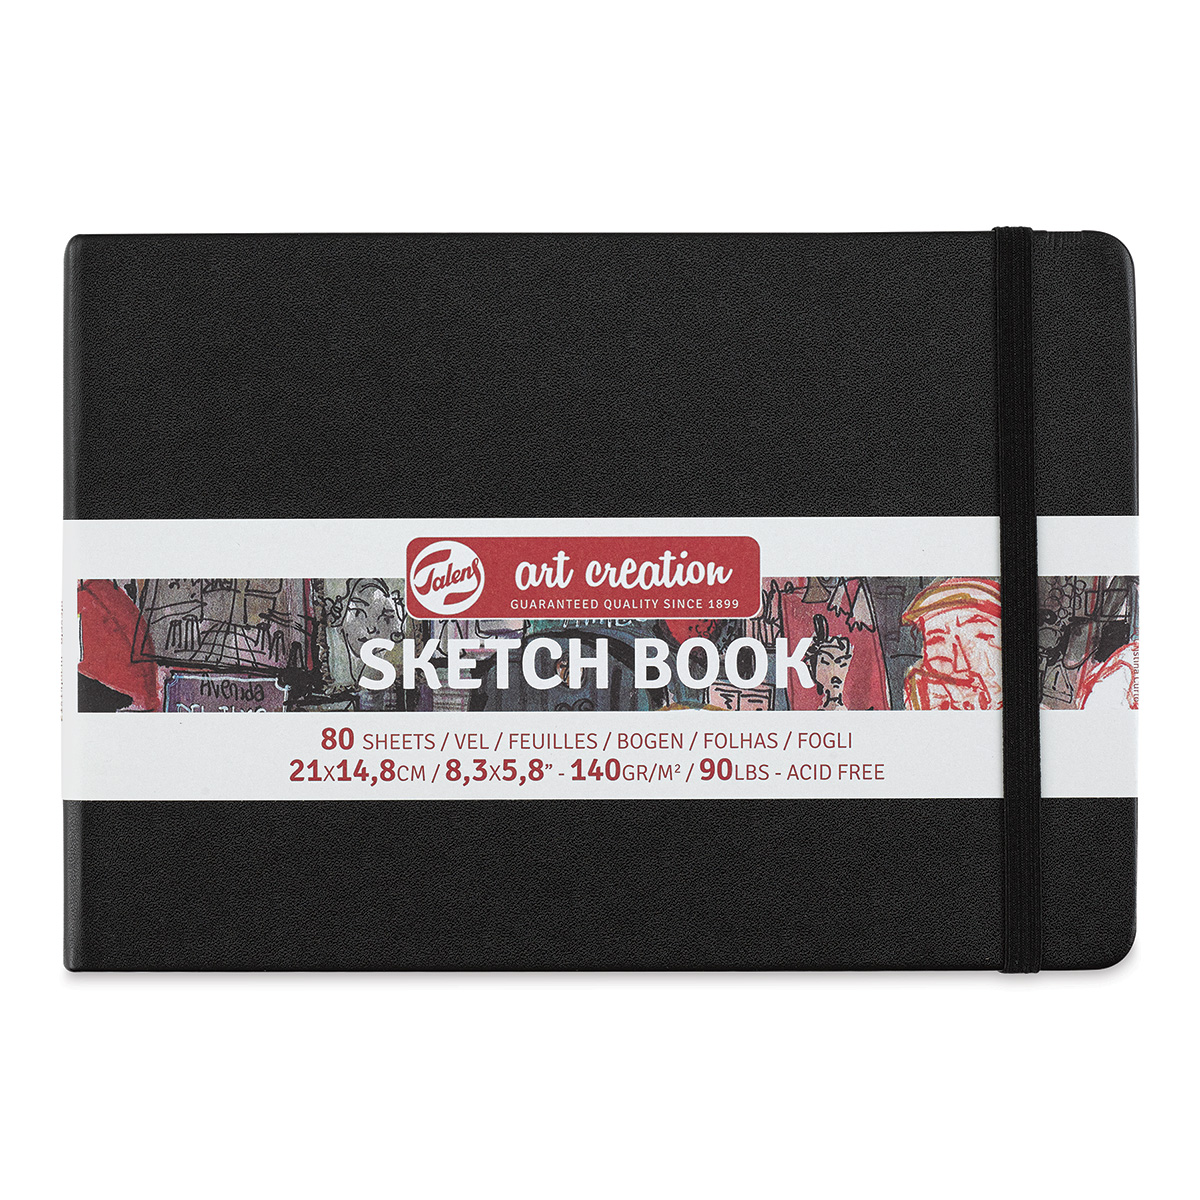 D3 Designer Sketchbook (5x8.25) – Cottonwood Arts